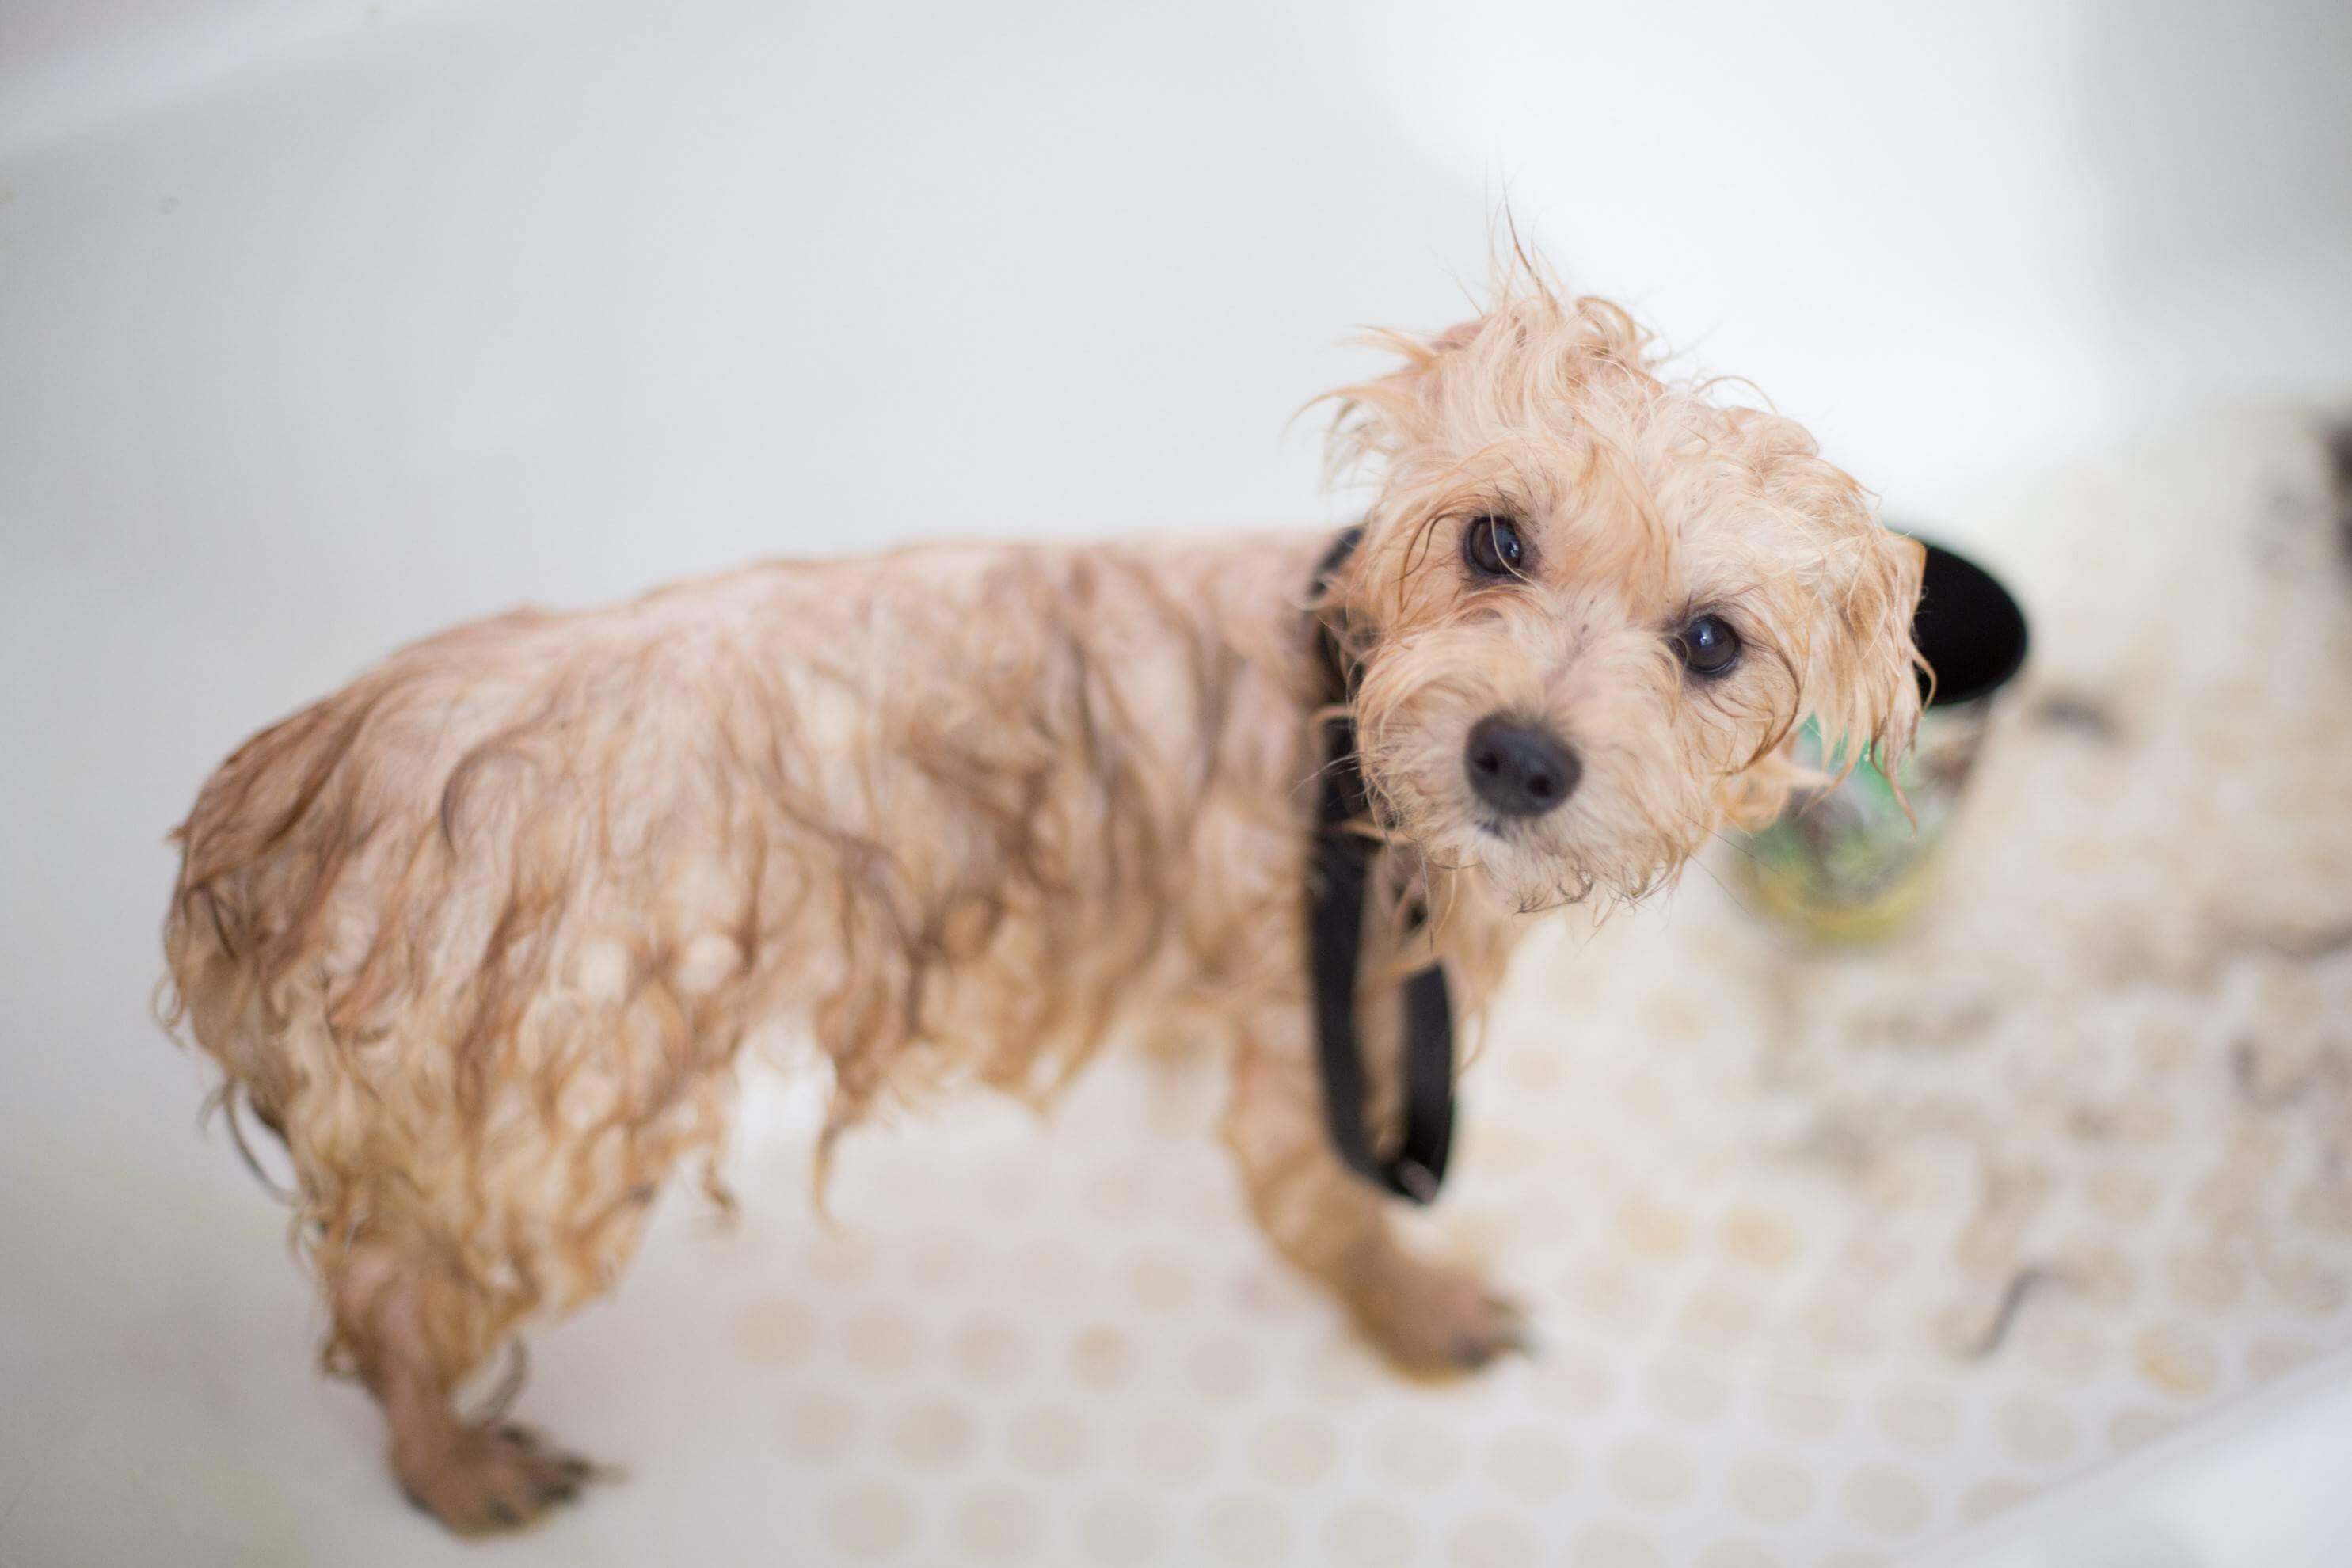 How Should I Give My Dog A Bath?